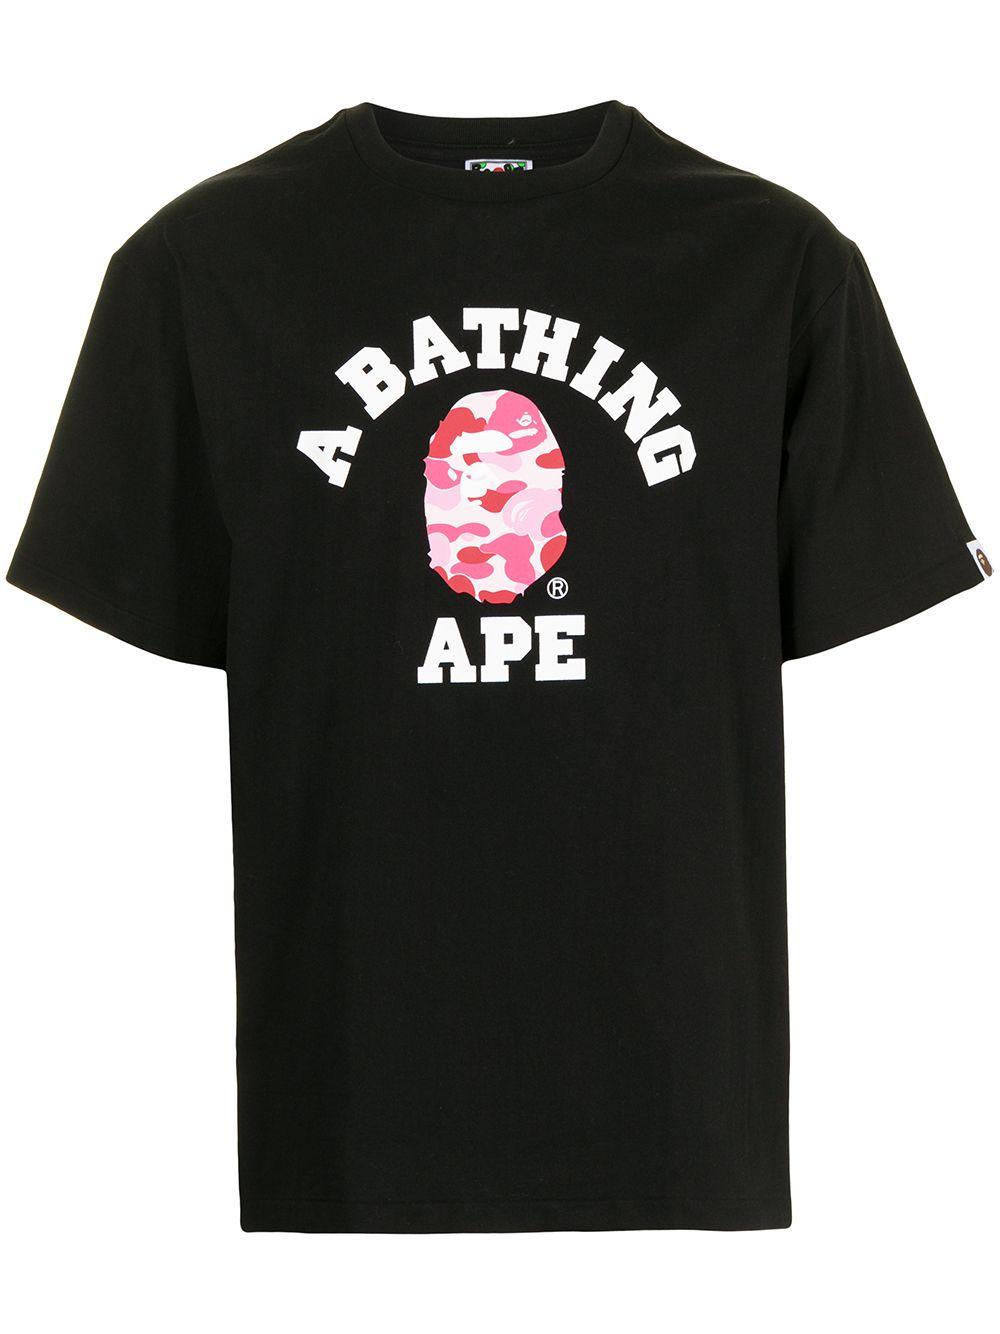 A Bathing Ape Logo-print Cotton T-shirt in Black for Men - Lyst